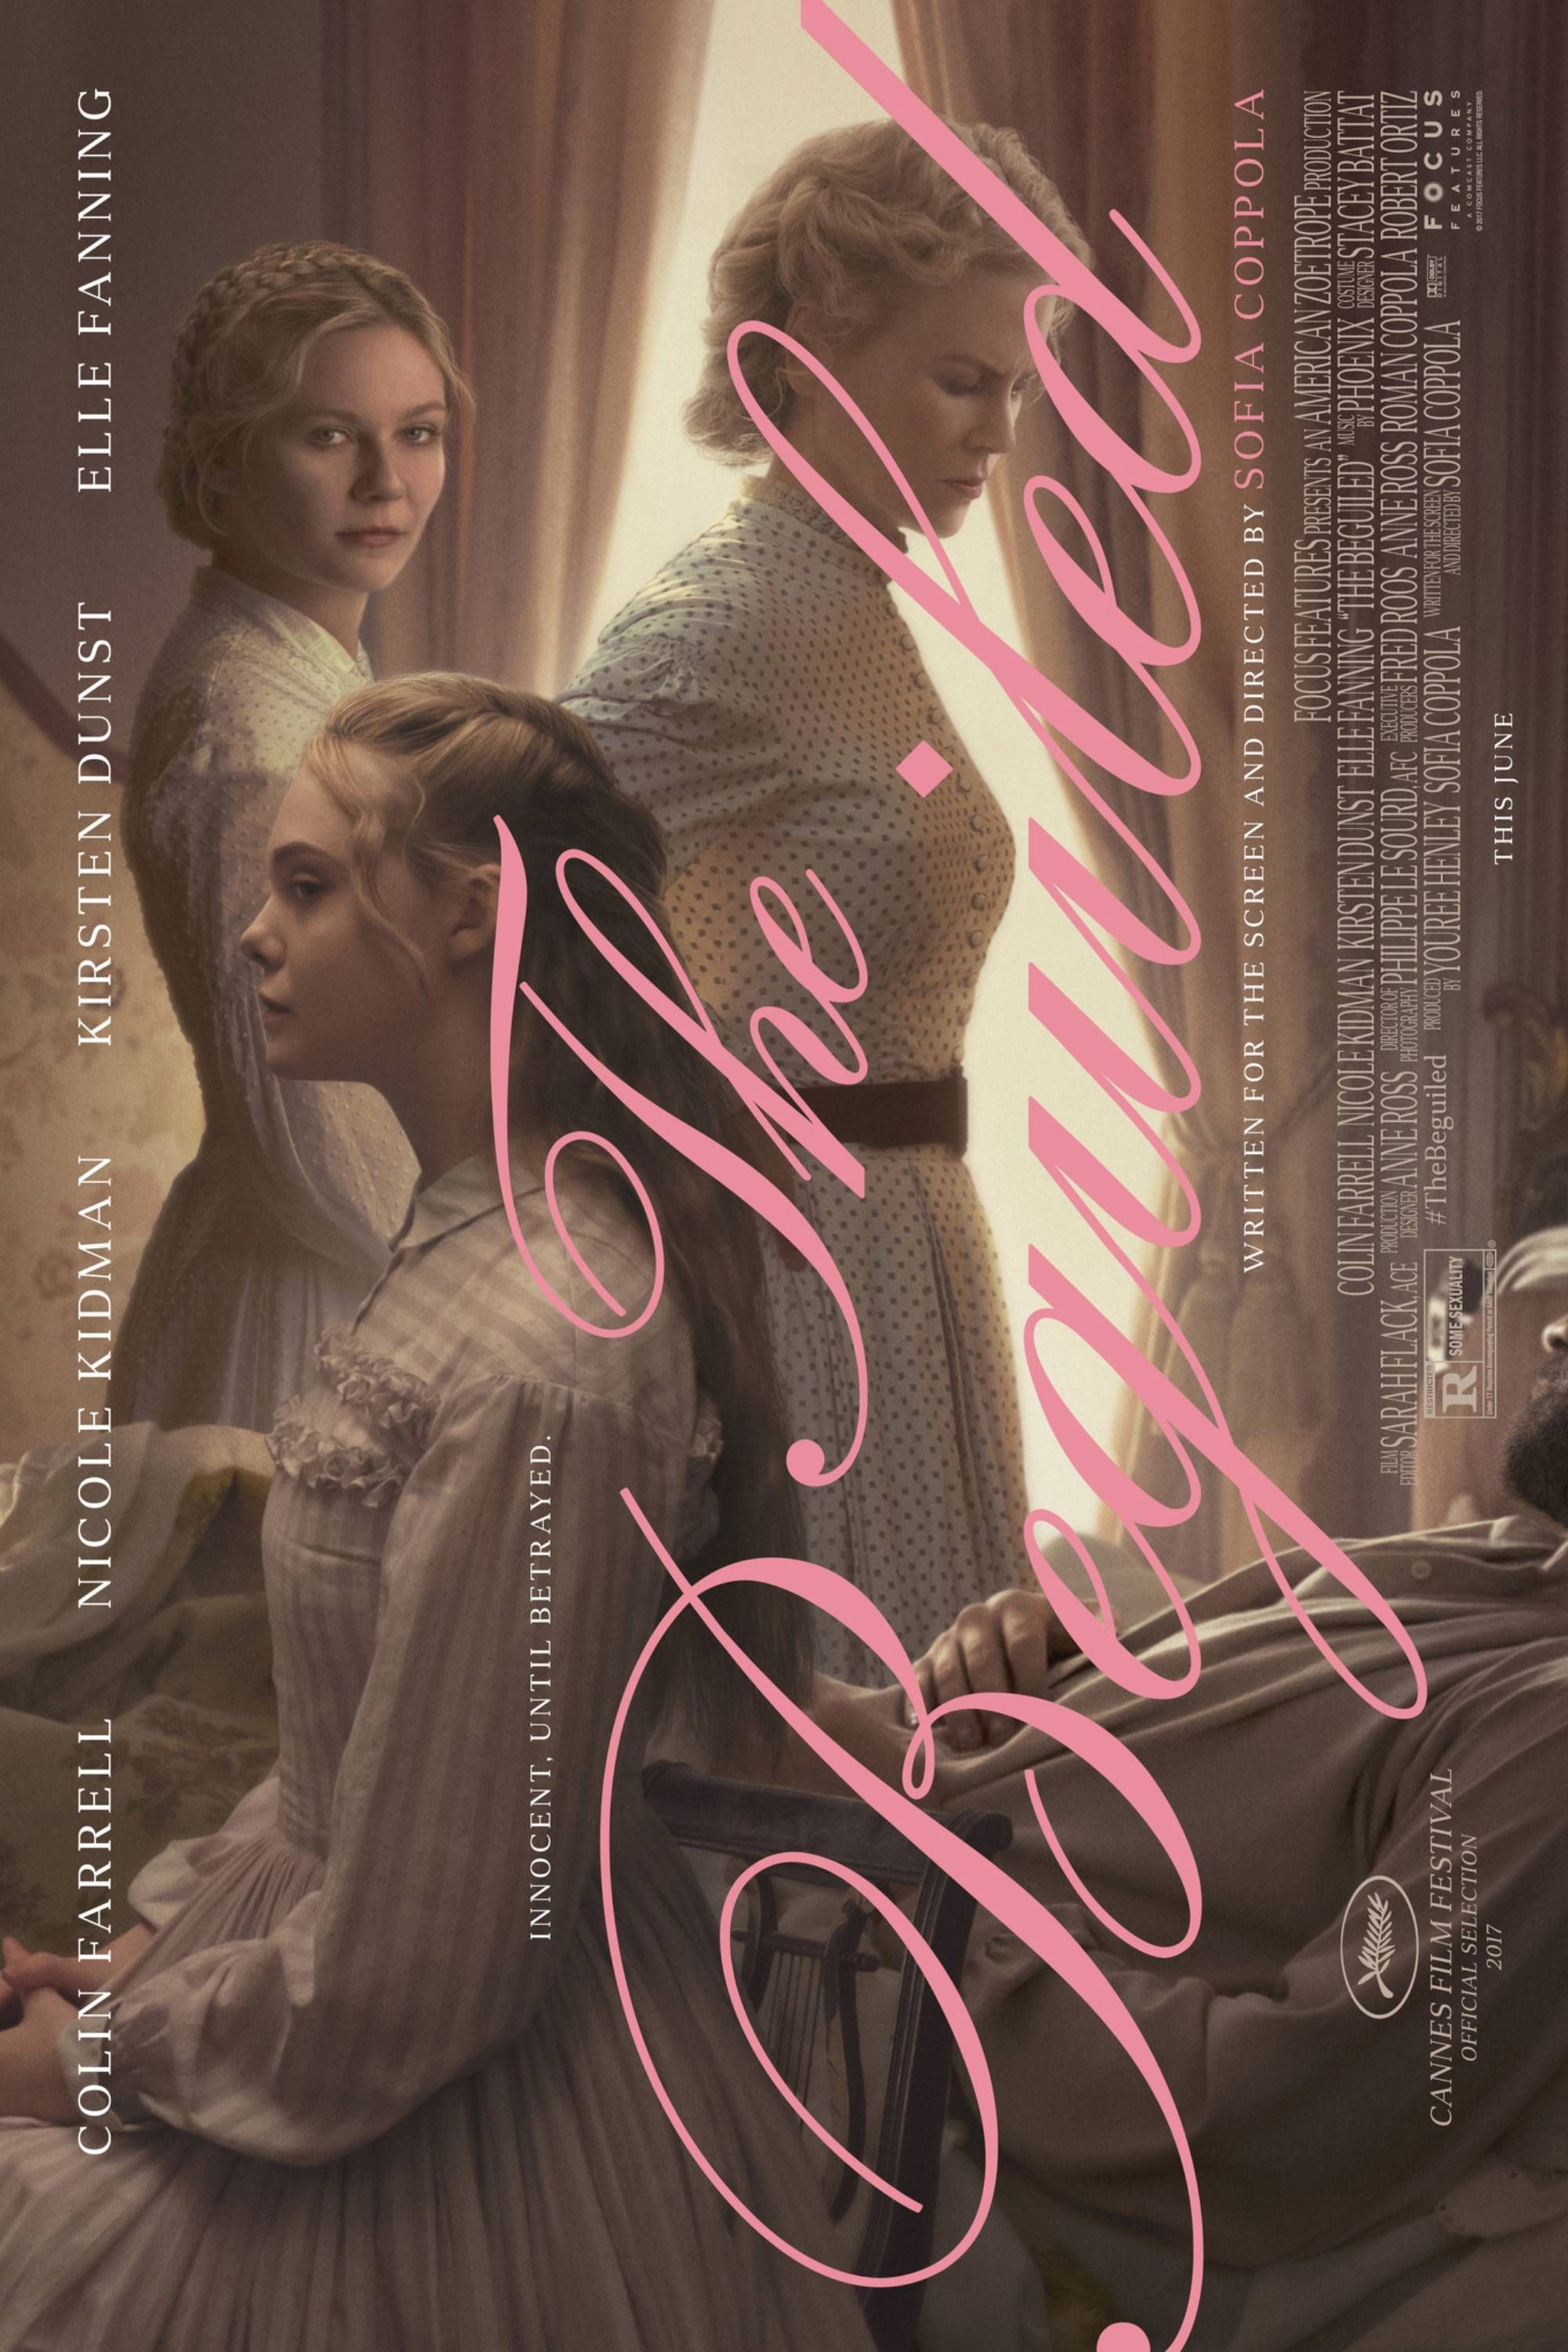 The Beguiled (2017) - Pôster - Nicole Kidman, Kirsten Dunst e Elie Fanning Usando vestidos brancos